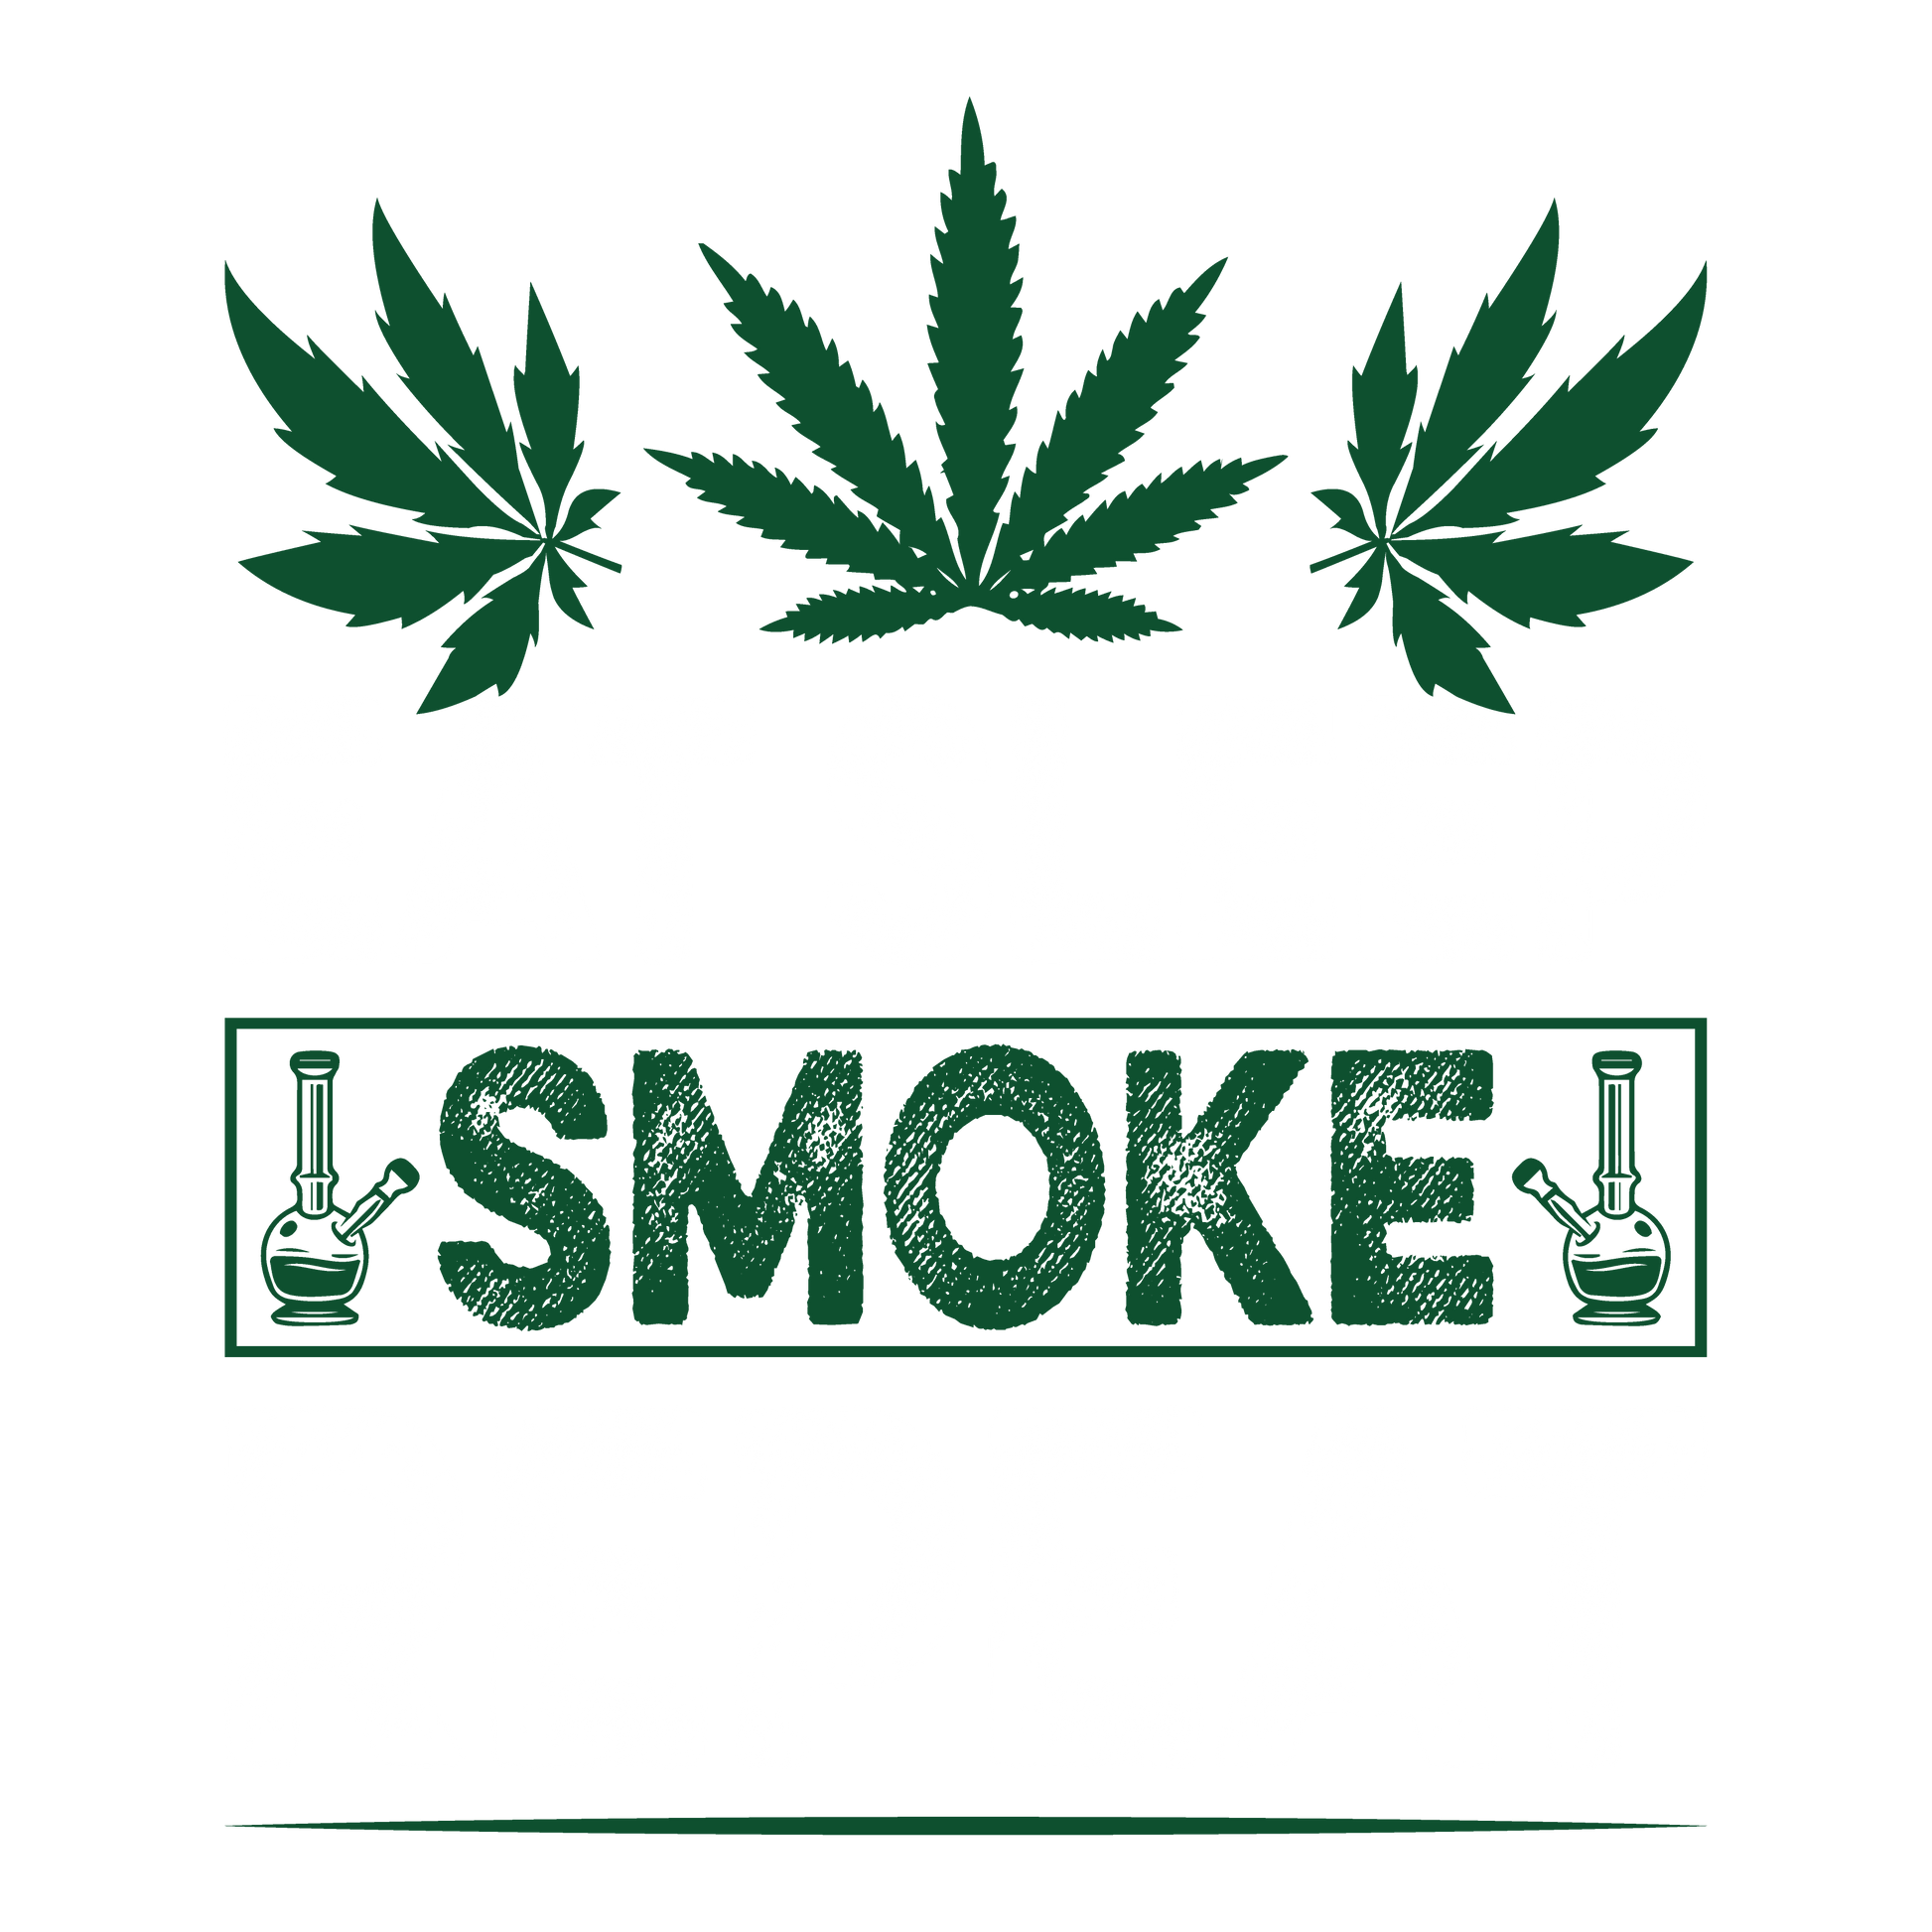 Funny T-Shirts design "Eat Sleep Smoke Repeat Mens Tee"